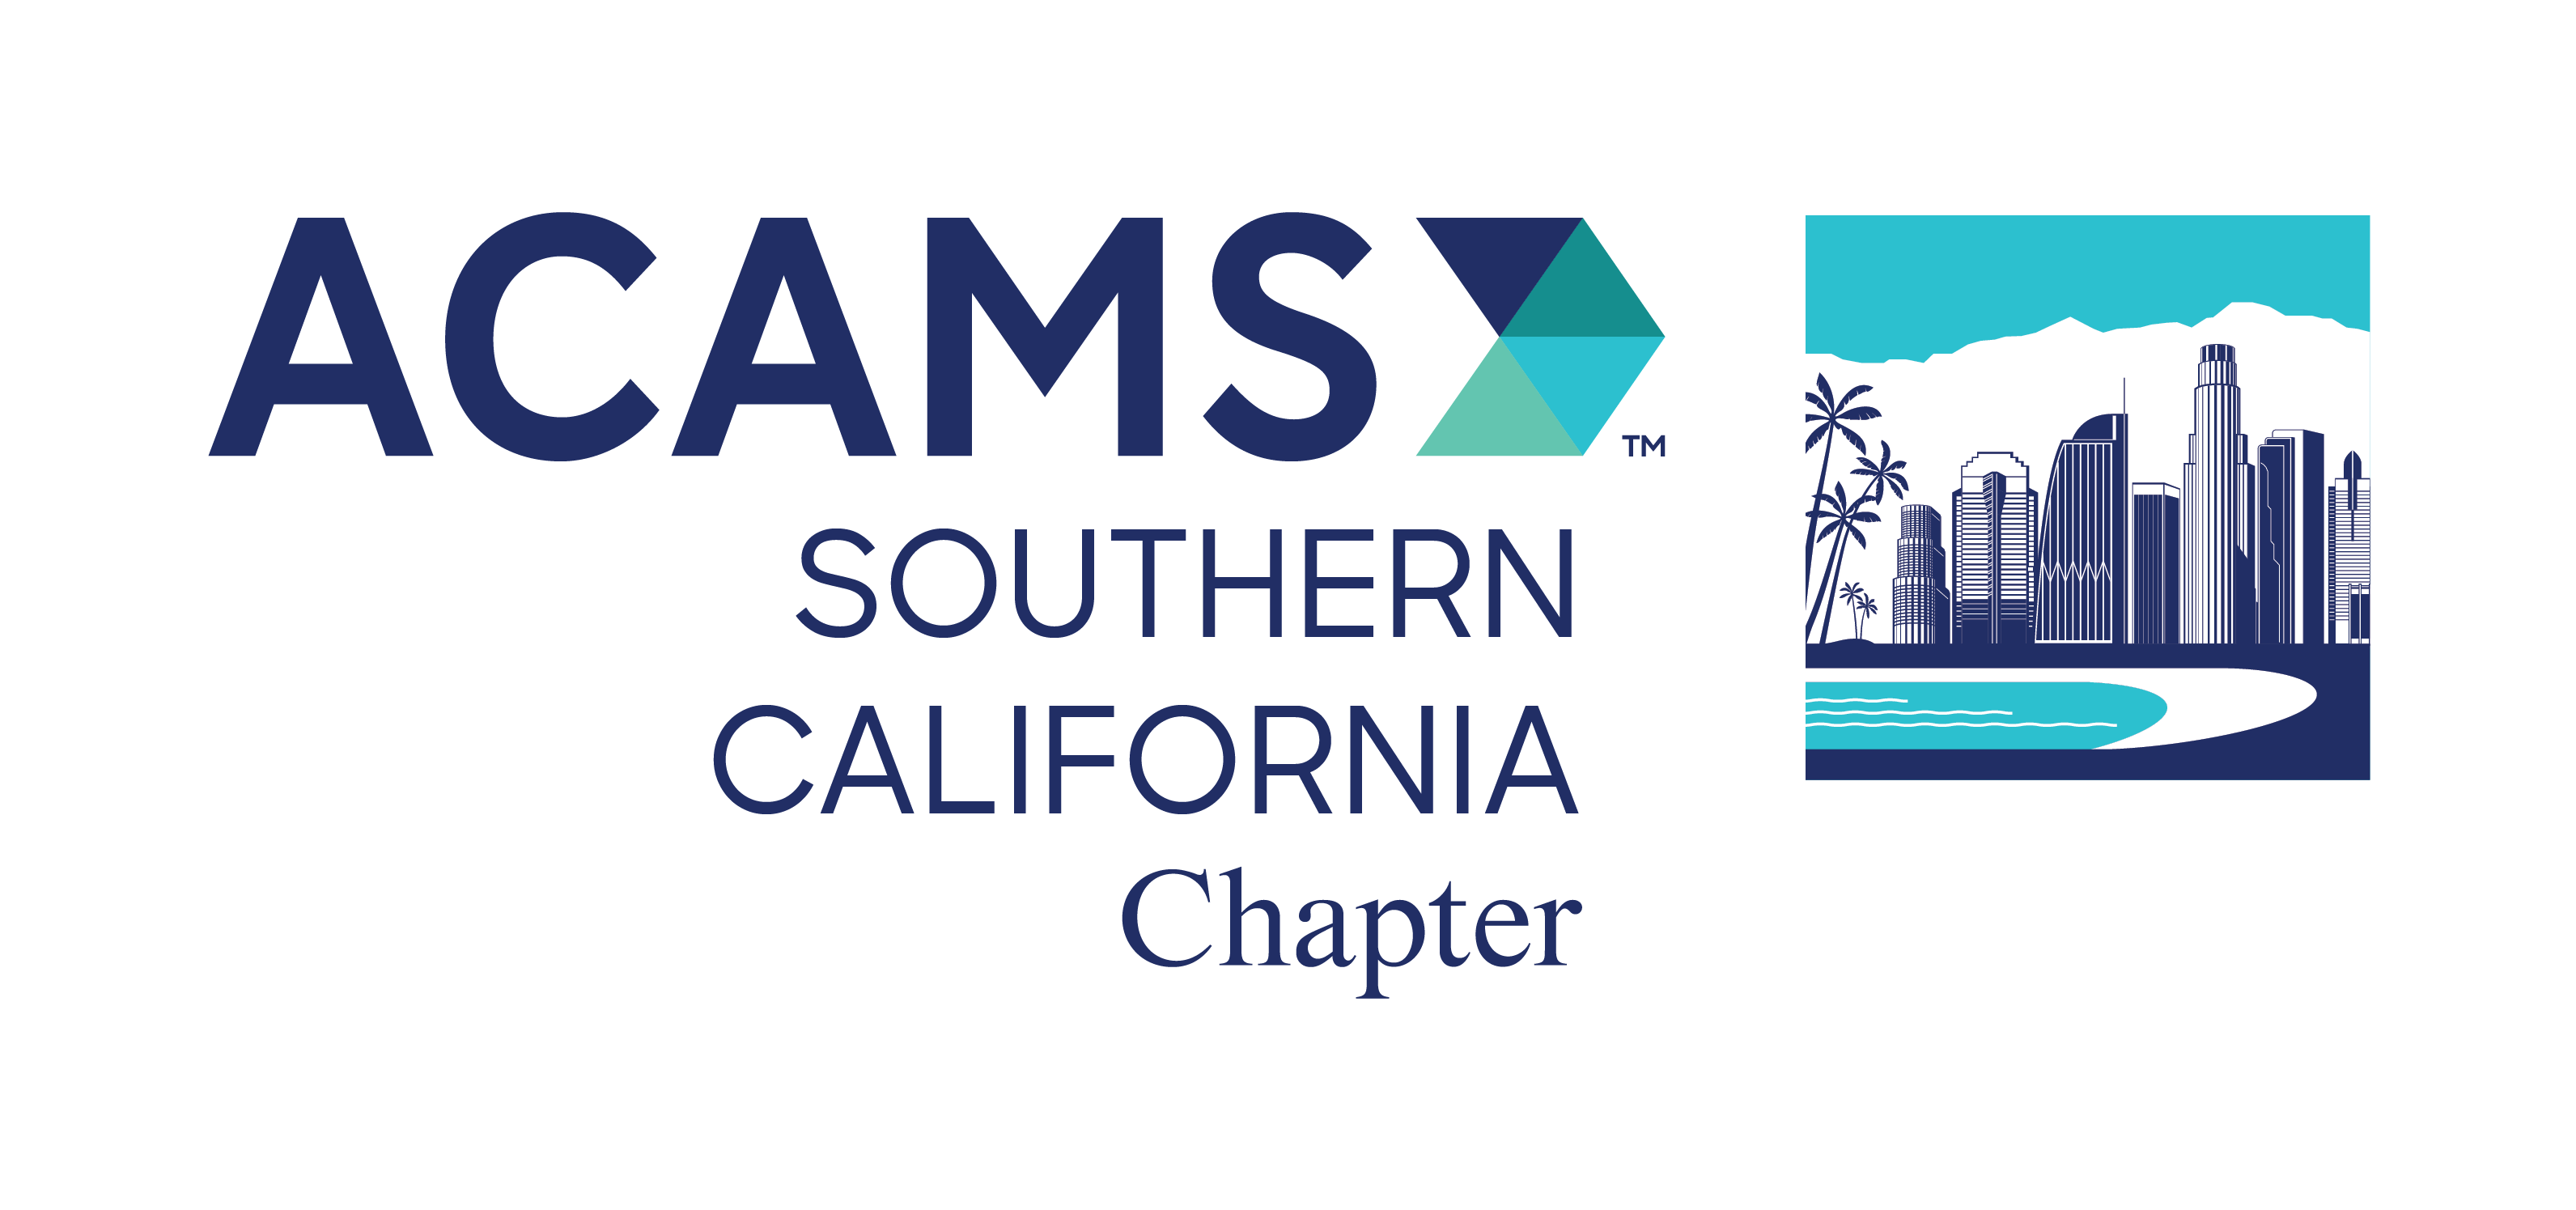 ACAMS Southern California Chapter